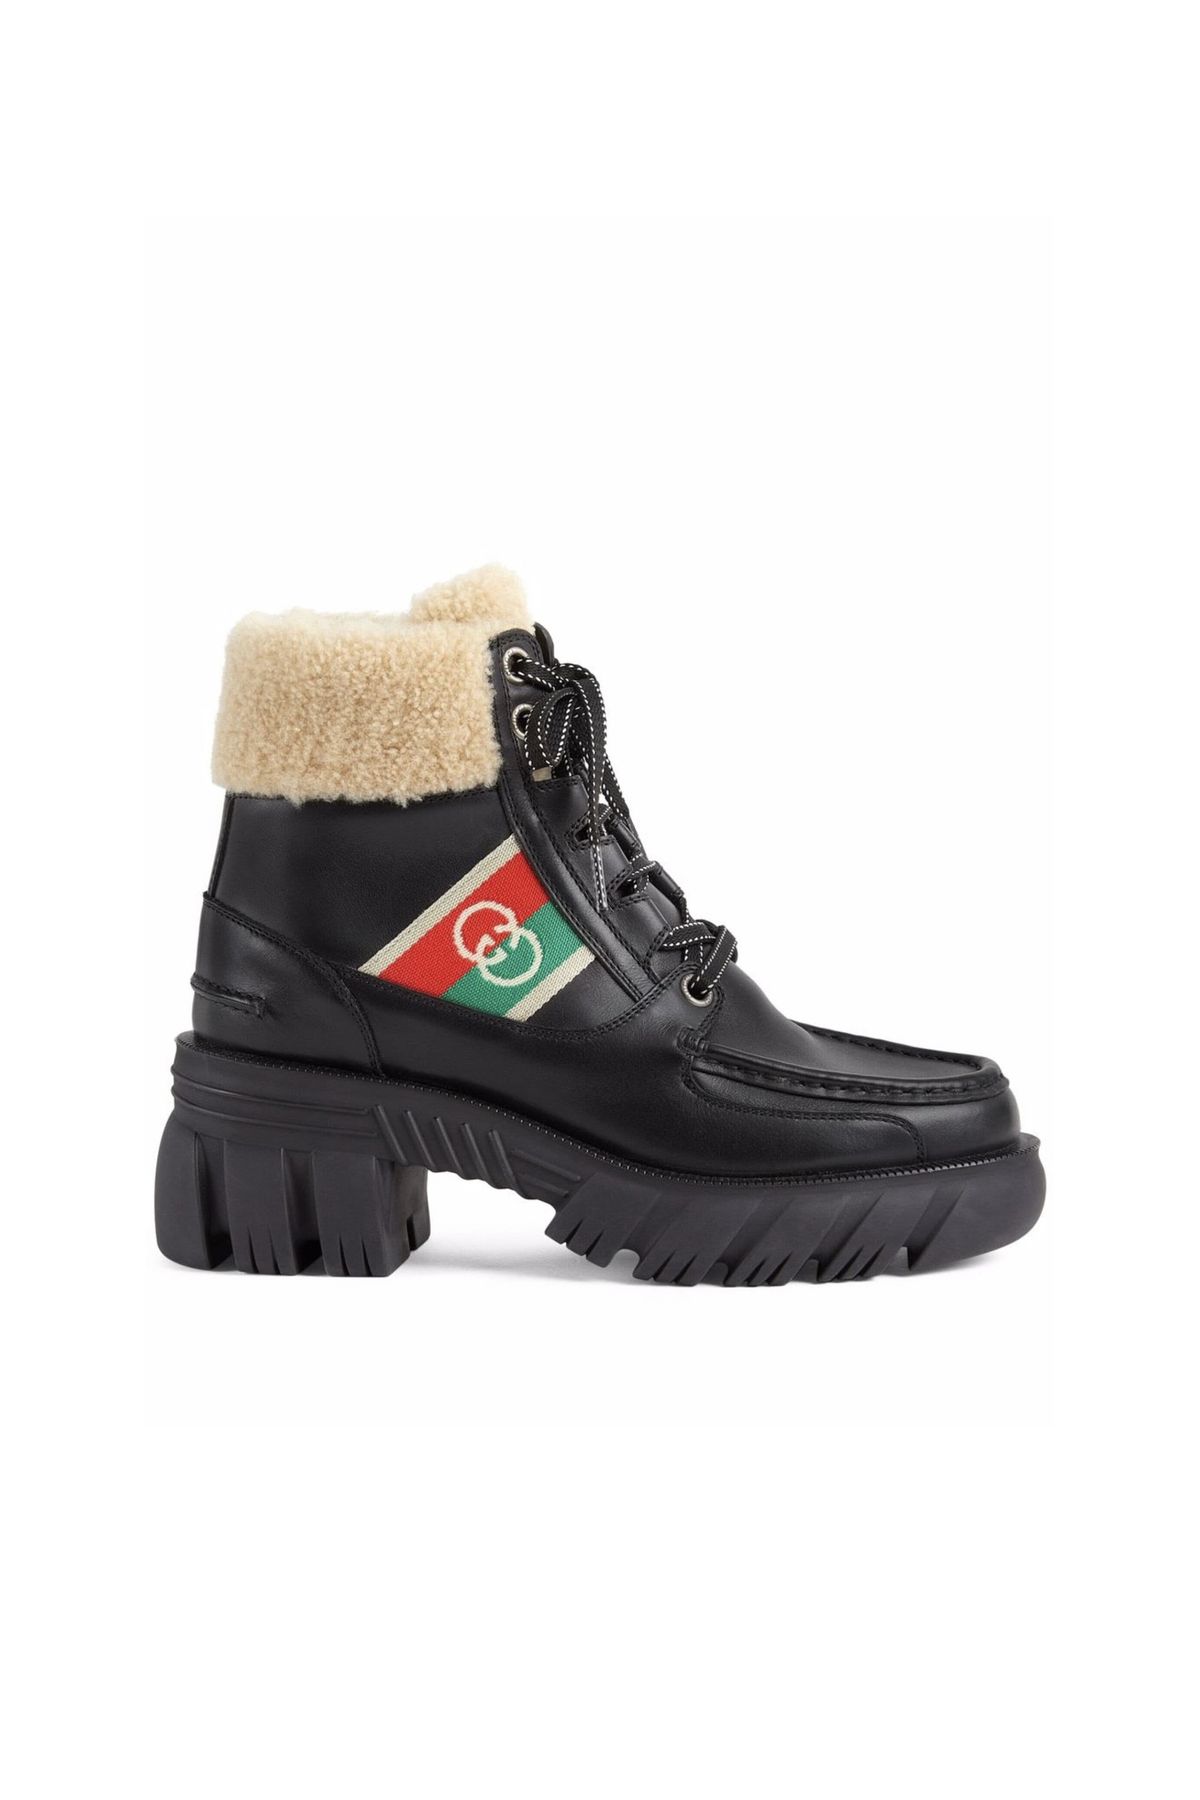 Gucci jacquard-motif ankle boots